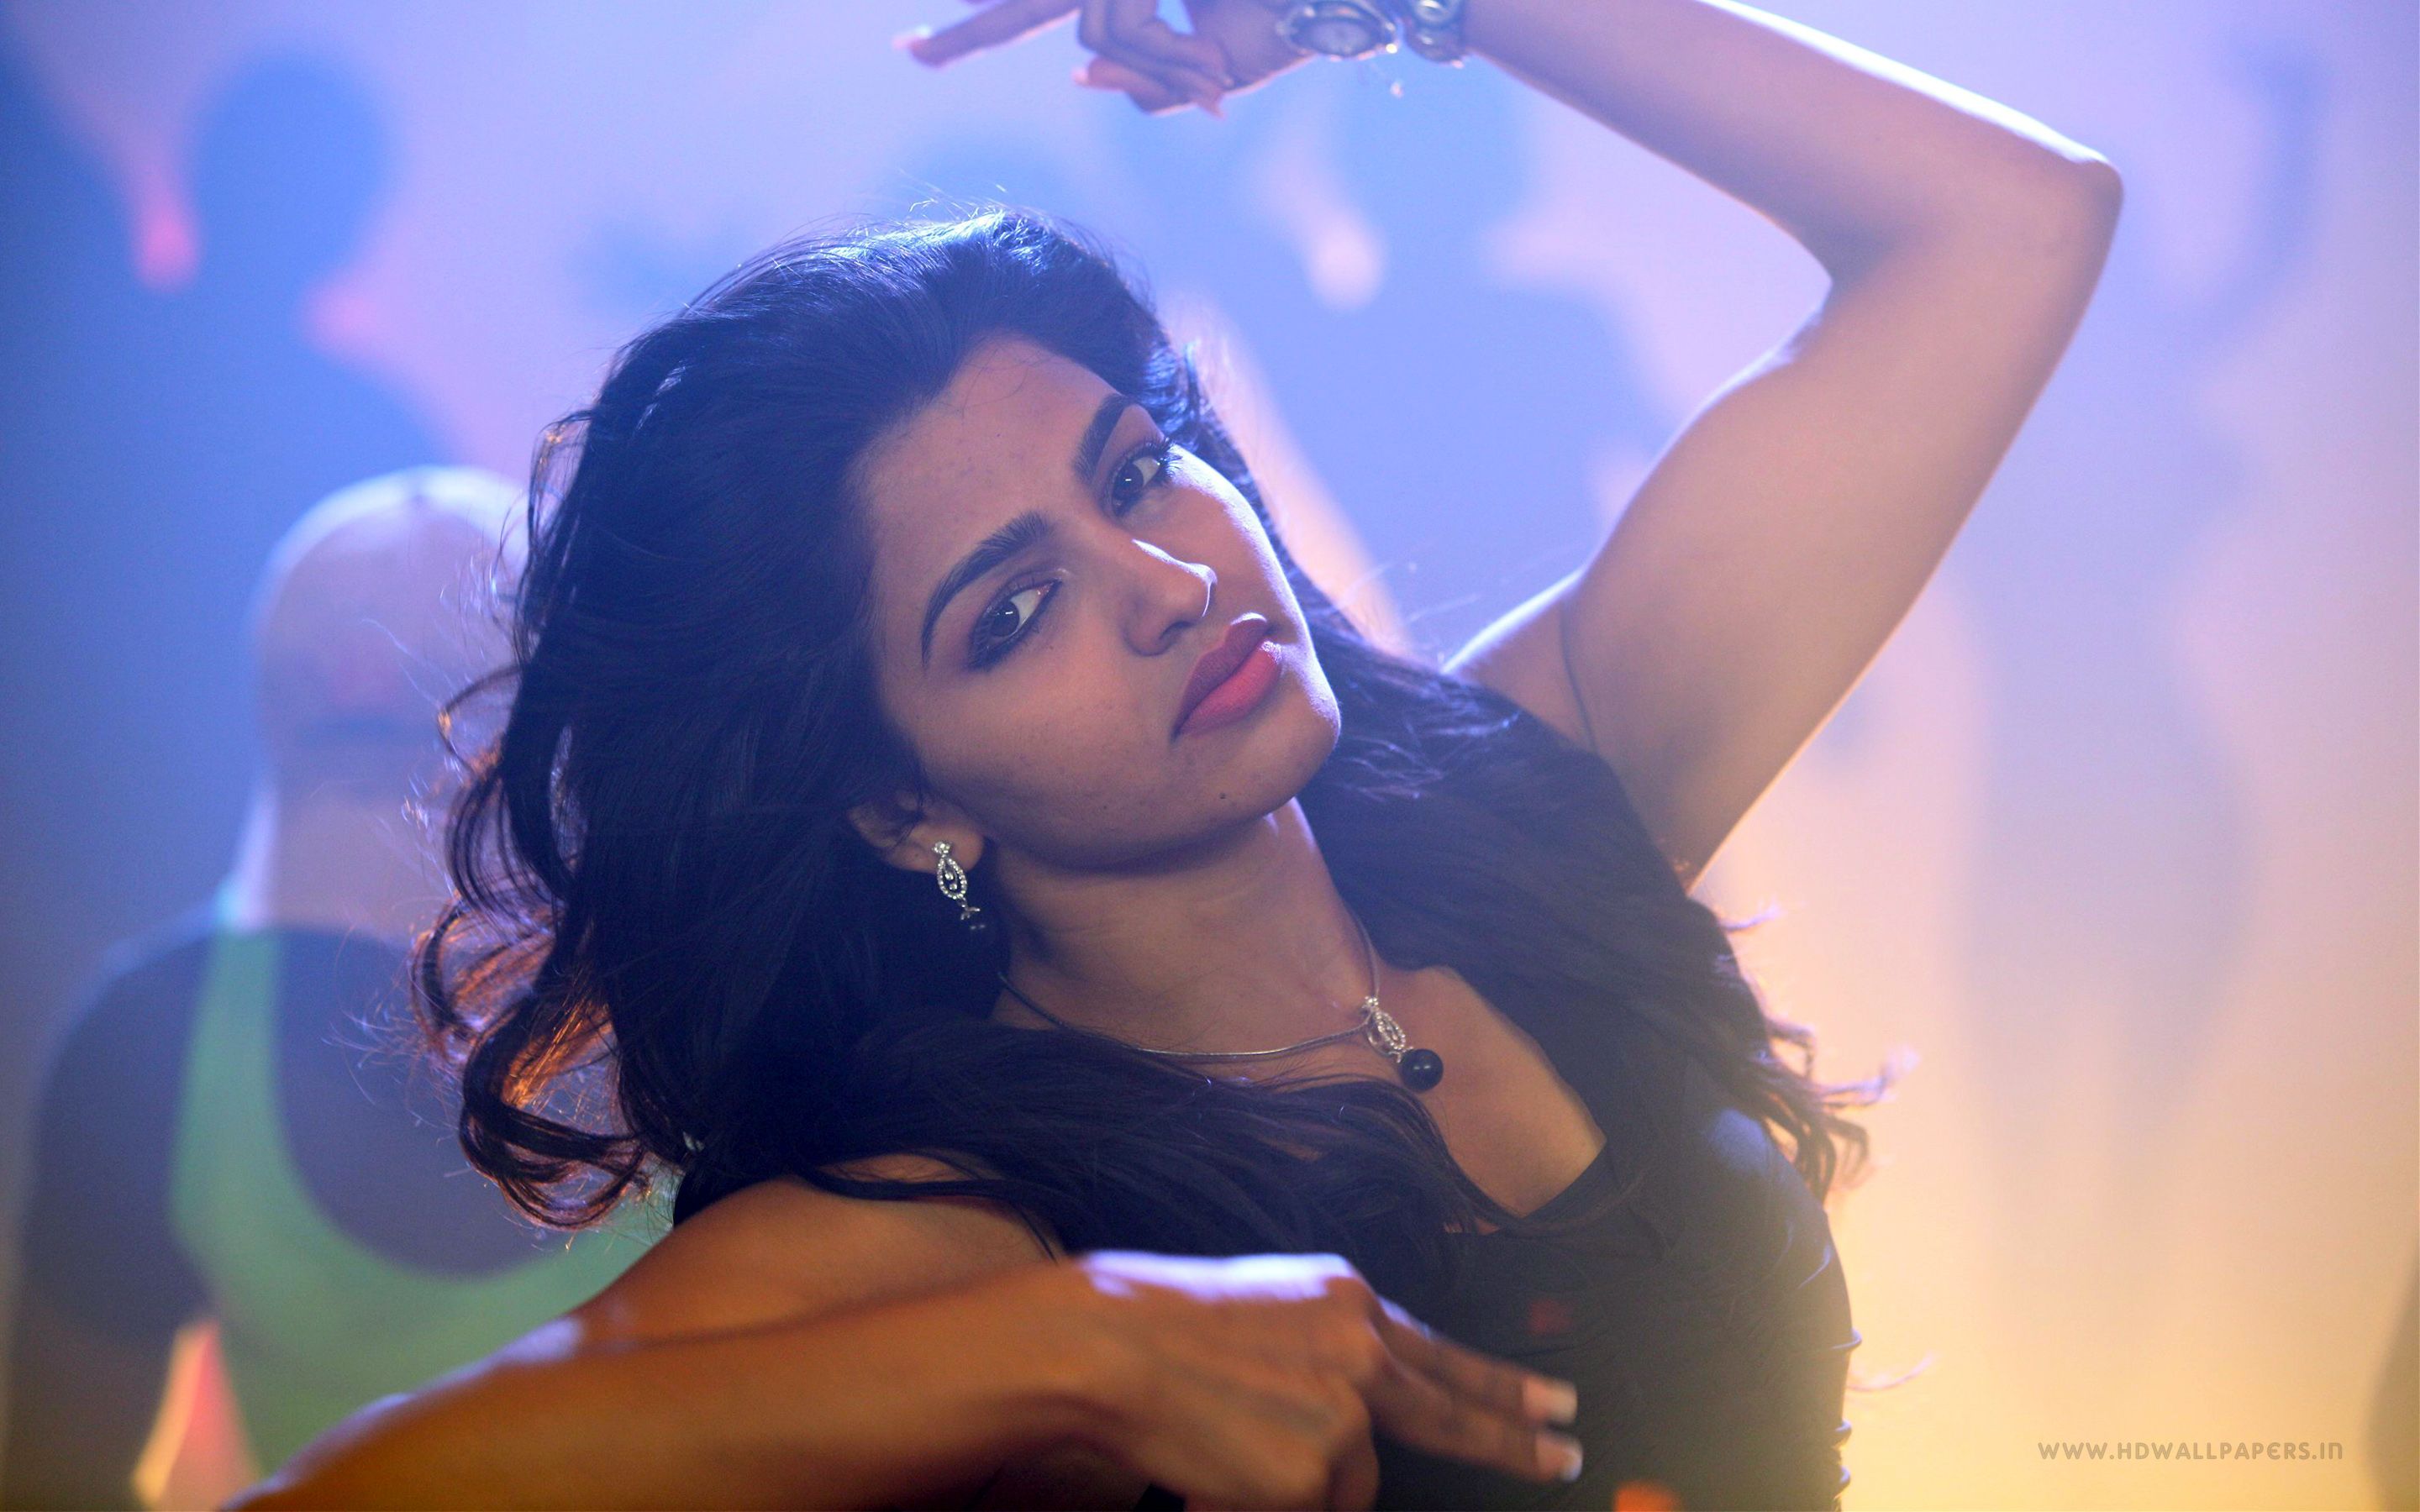 tamil actress HD image download لم يسبق له مثيل الصور + tier3.xyz